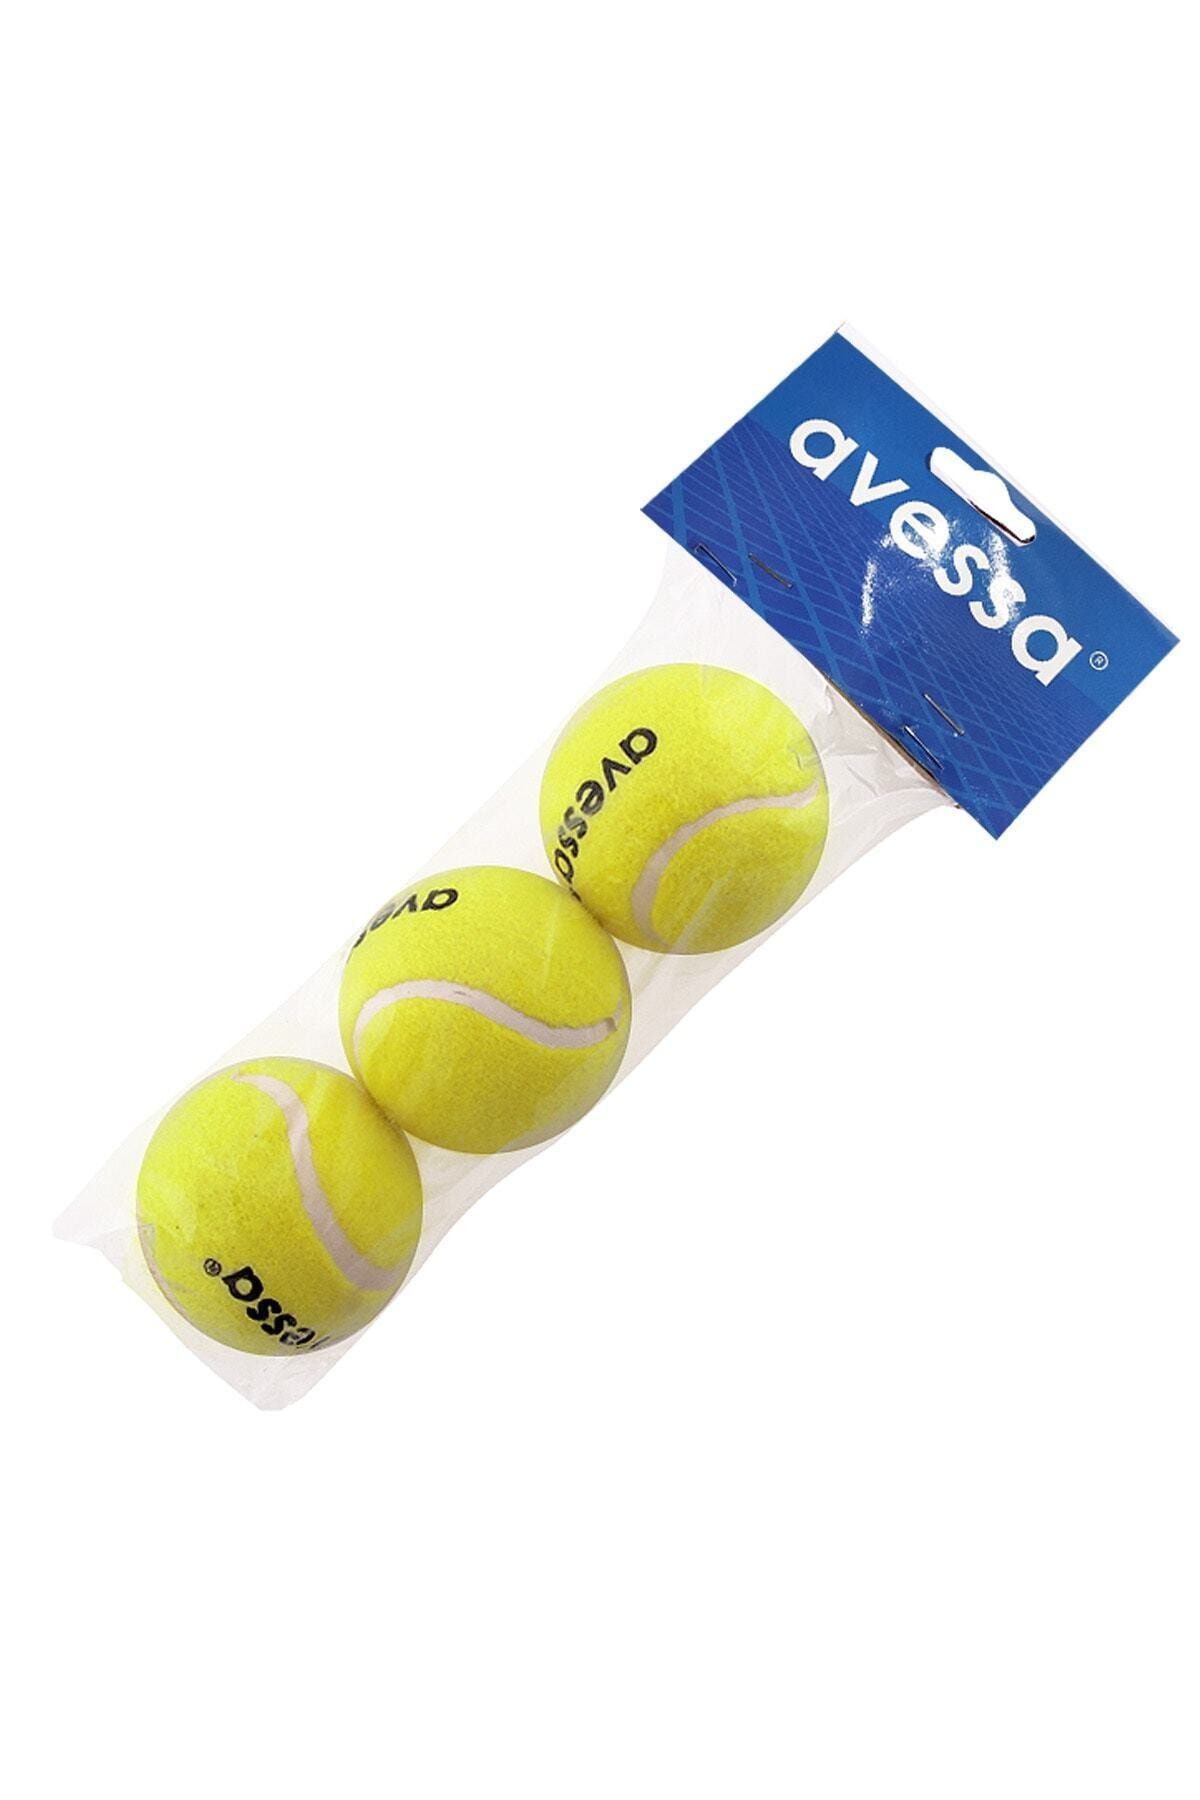 Avessa Tenis Topu 3 adet Sarı Tt-100